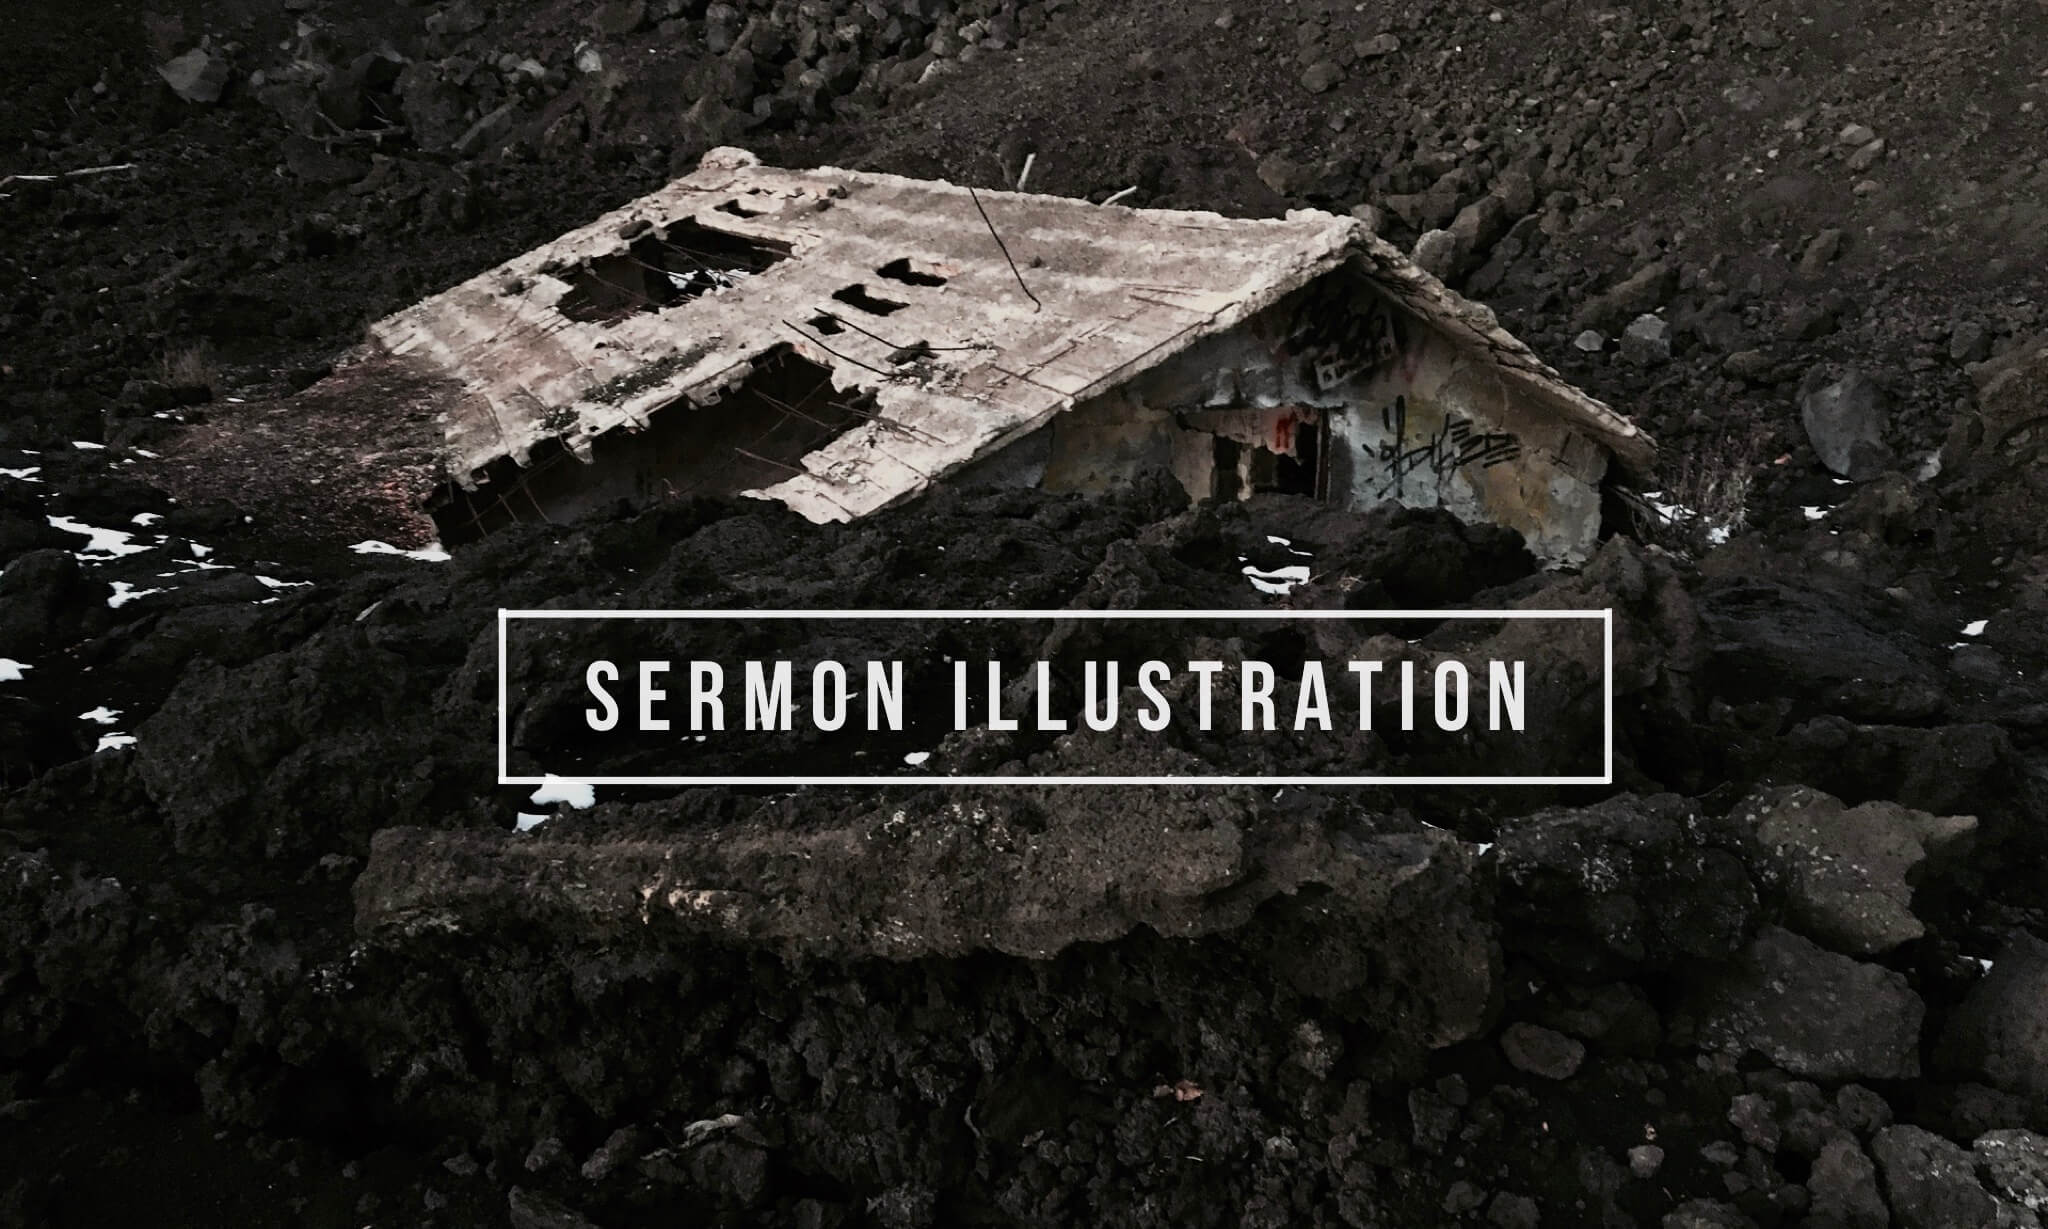 death over change sermon illustration